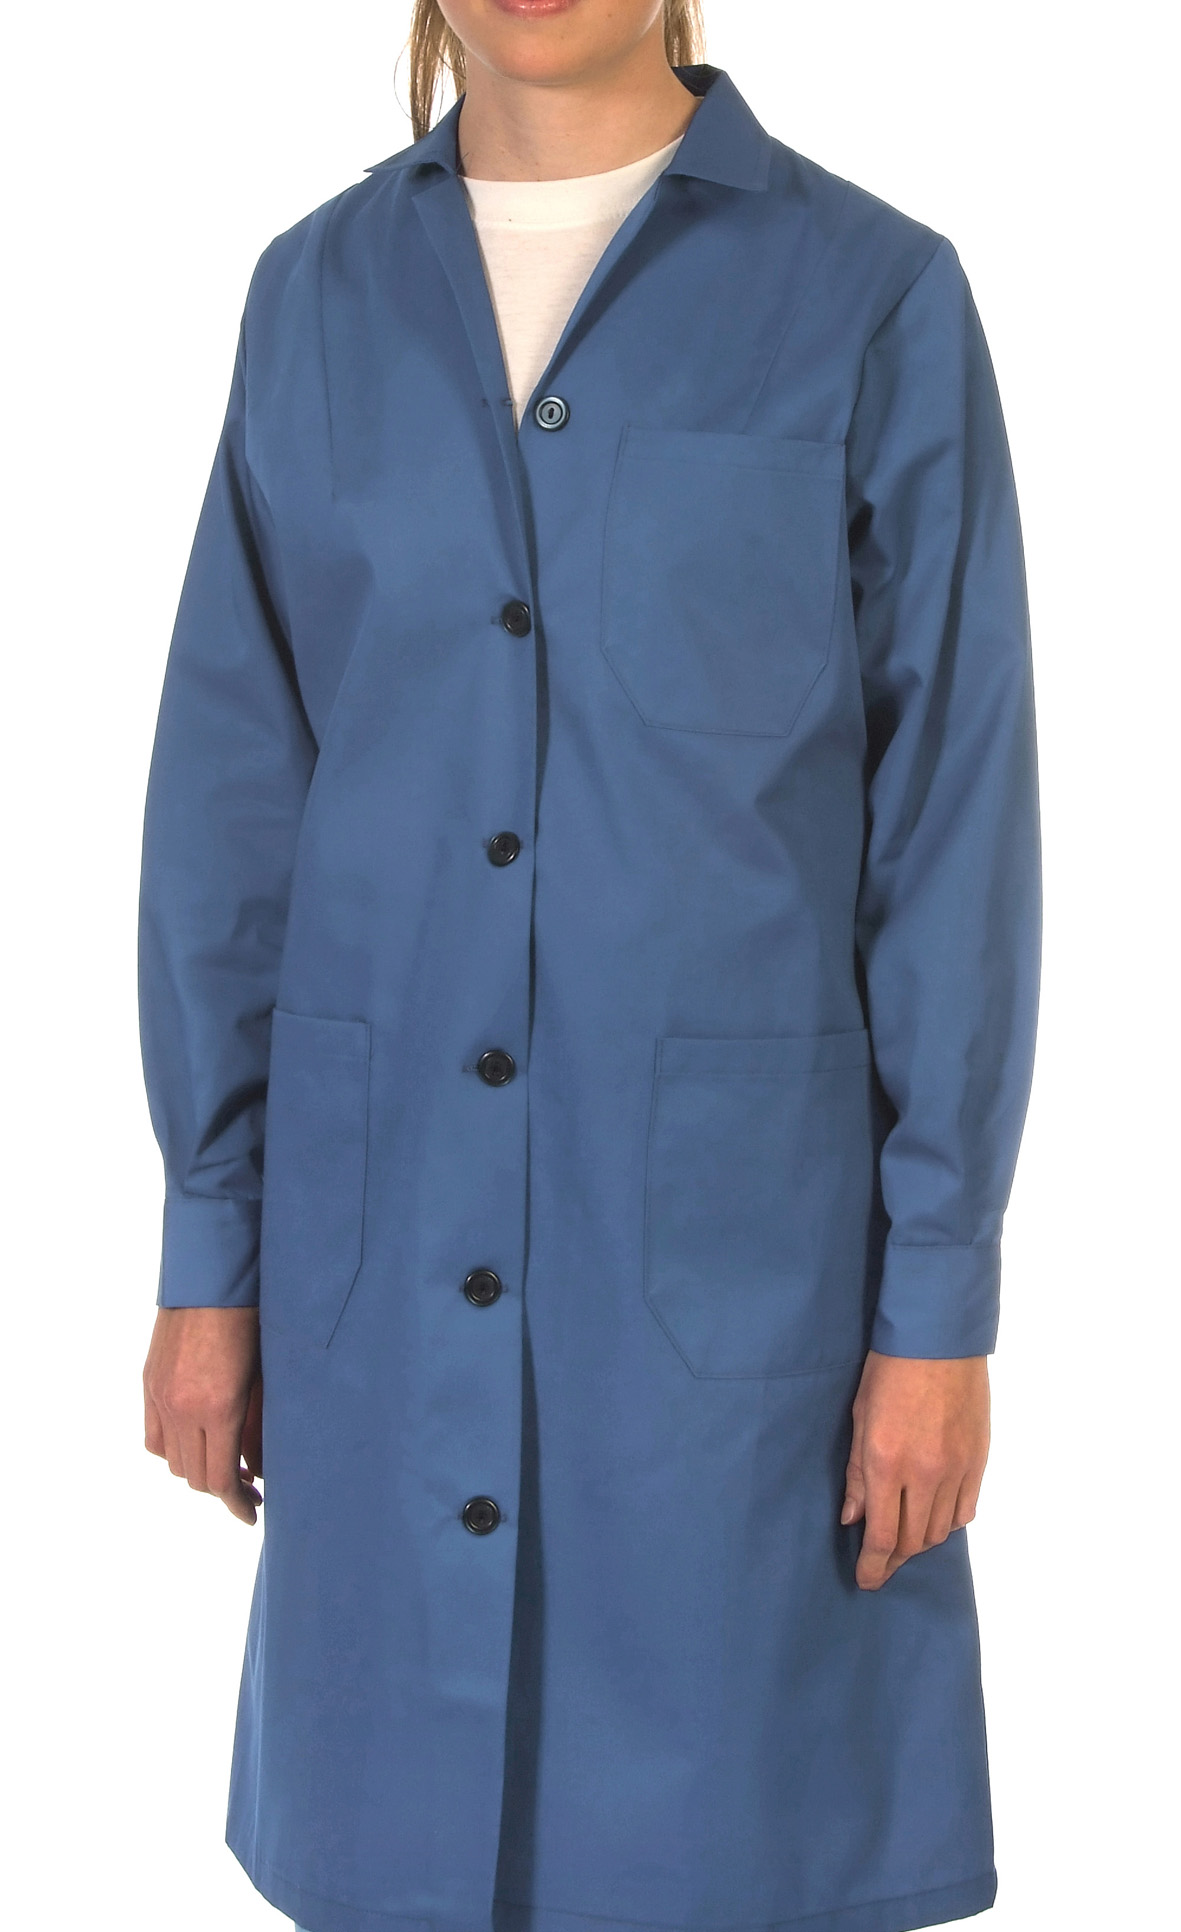 Womens lab coat Image